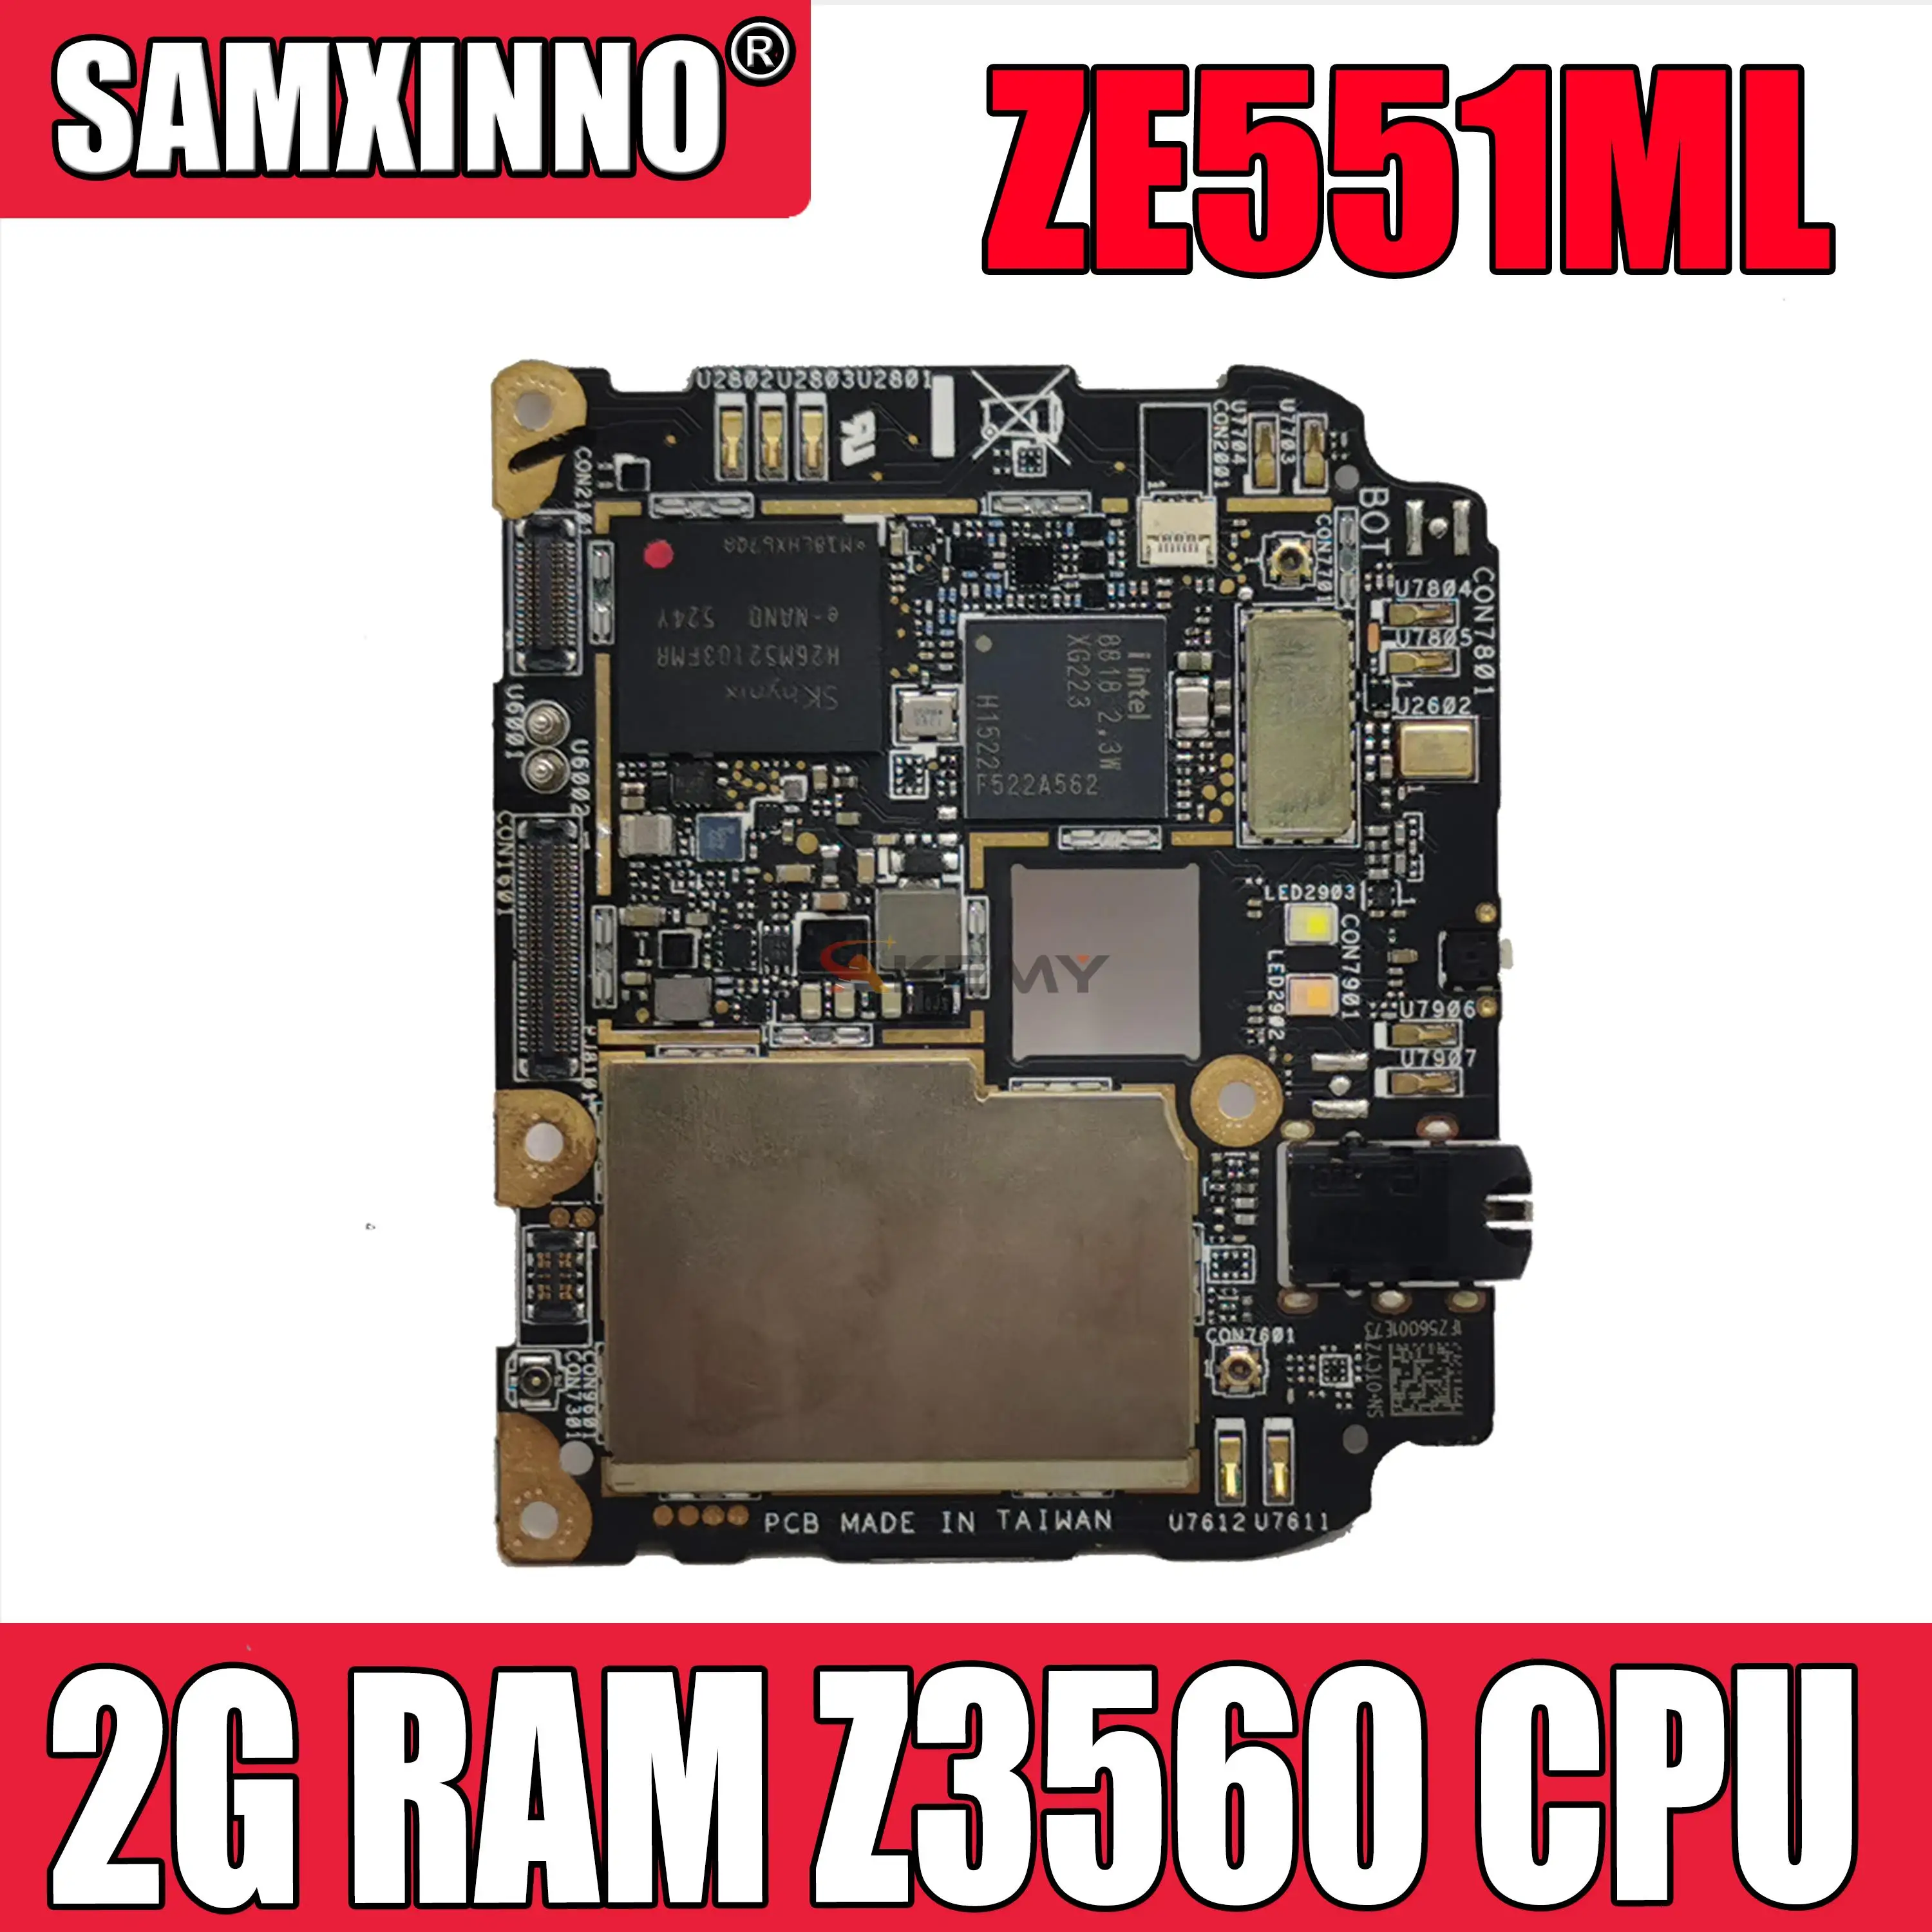 

Akemy Motherboard for ASUS ZenFone 2 ZE551ML Mainboard 2G RAM Z3560 CPU Logic Board Circuits Accessory Bundles